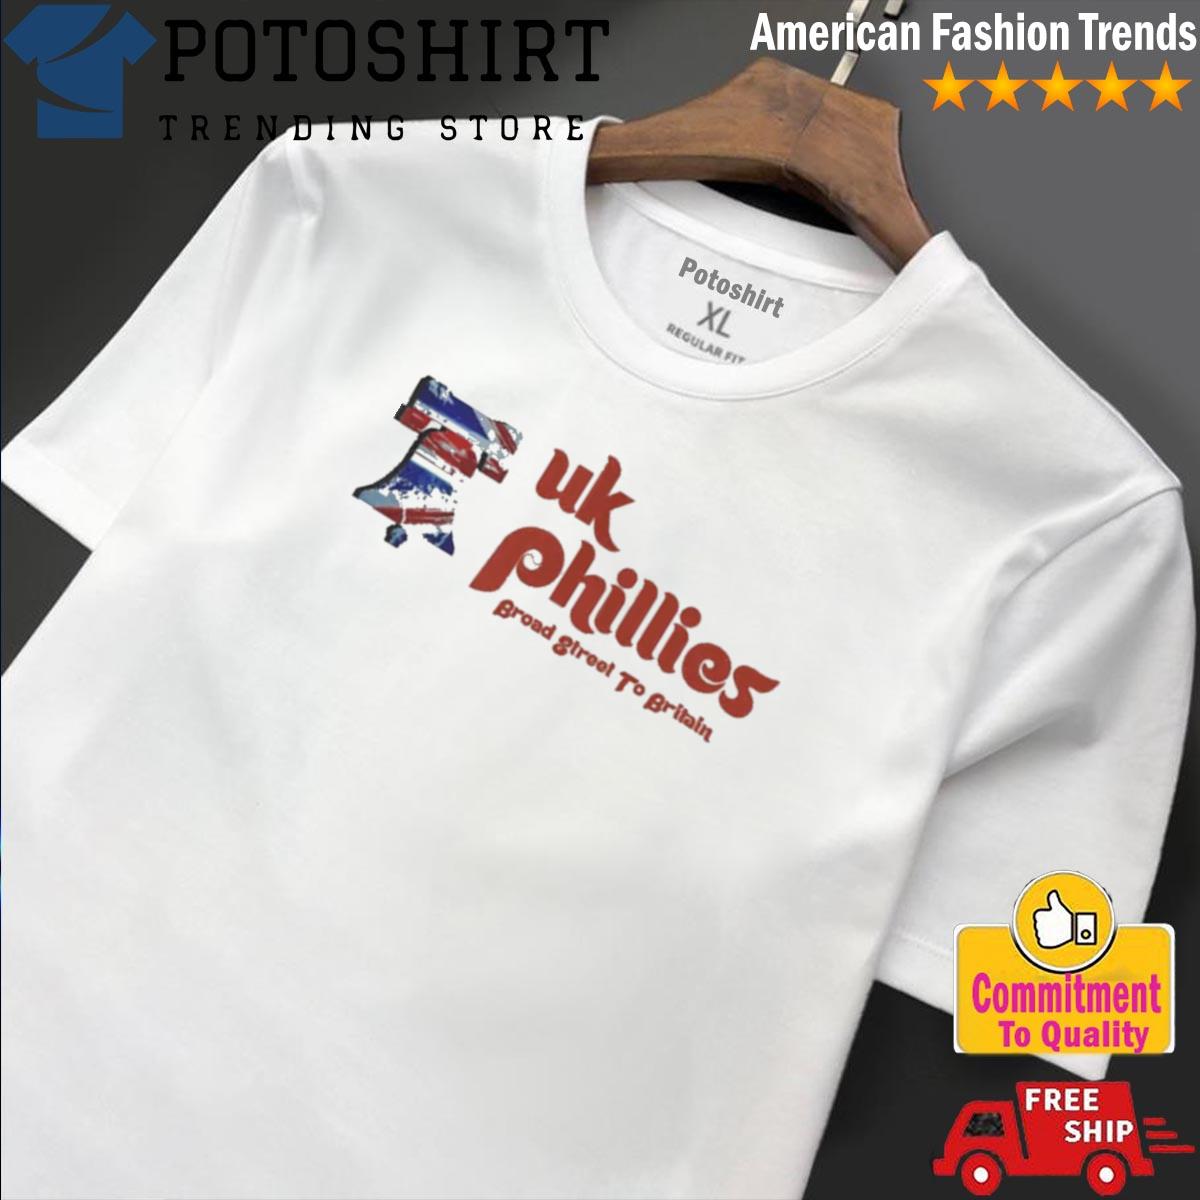 Philadelphia Phillies Uk Phillies Broad Street To Britain T shirt